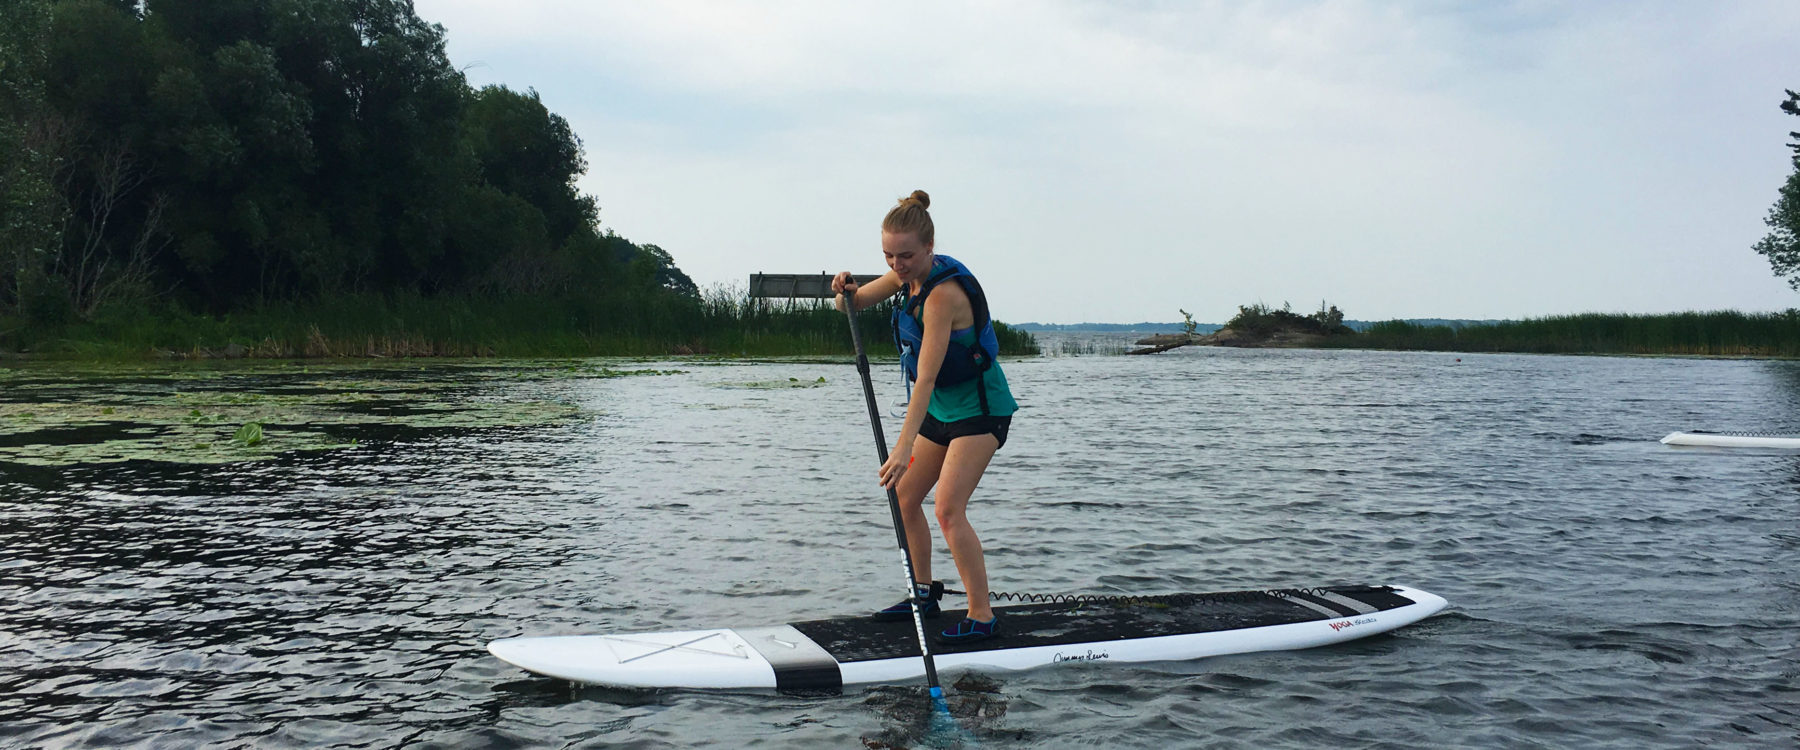 strucblog learning to paddle board